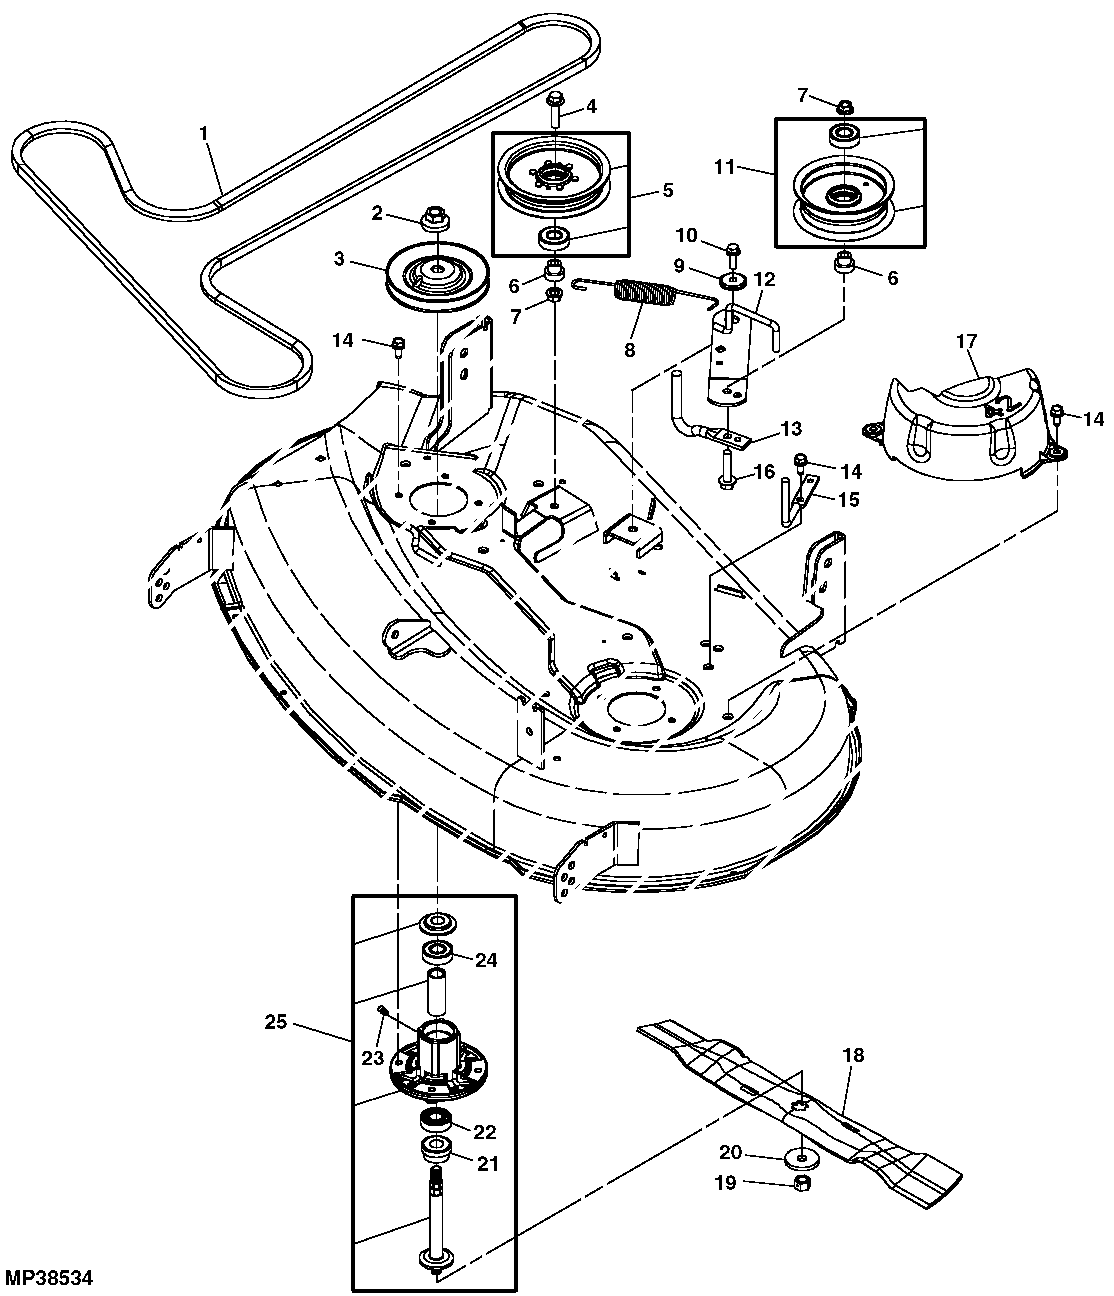 John Deere Z225 Parts Diagram - Heat exchanger spare parts